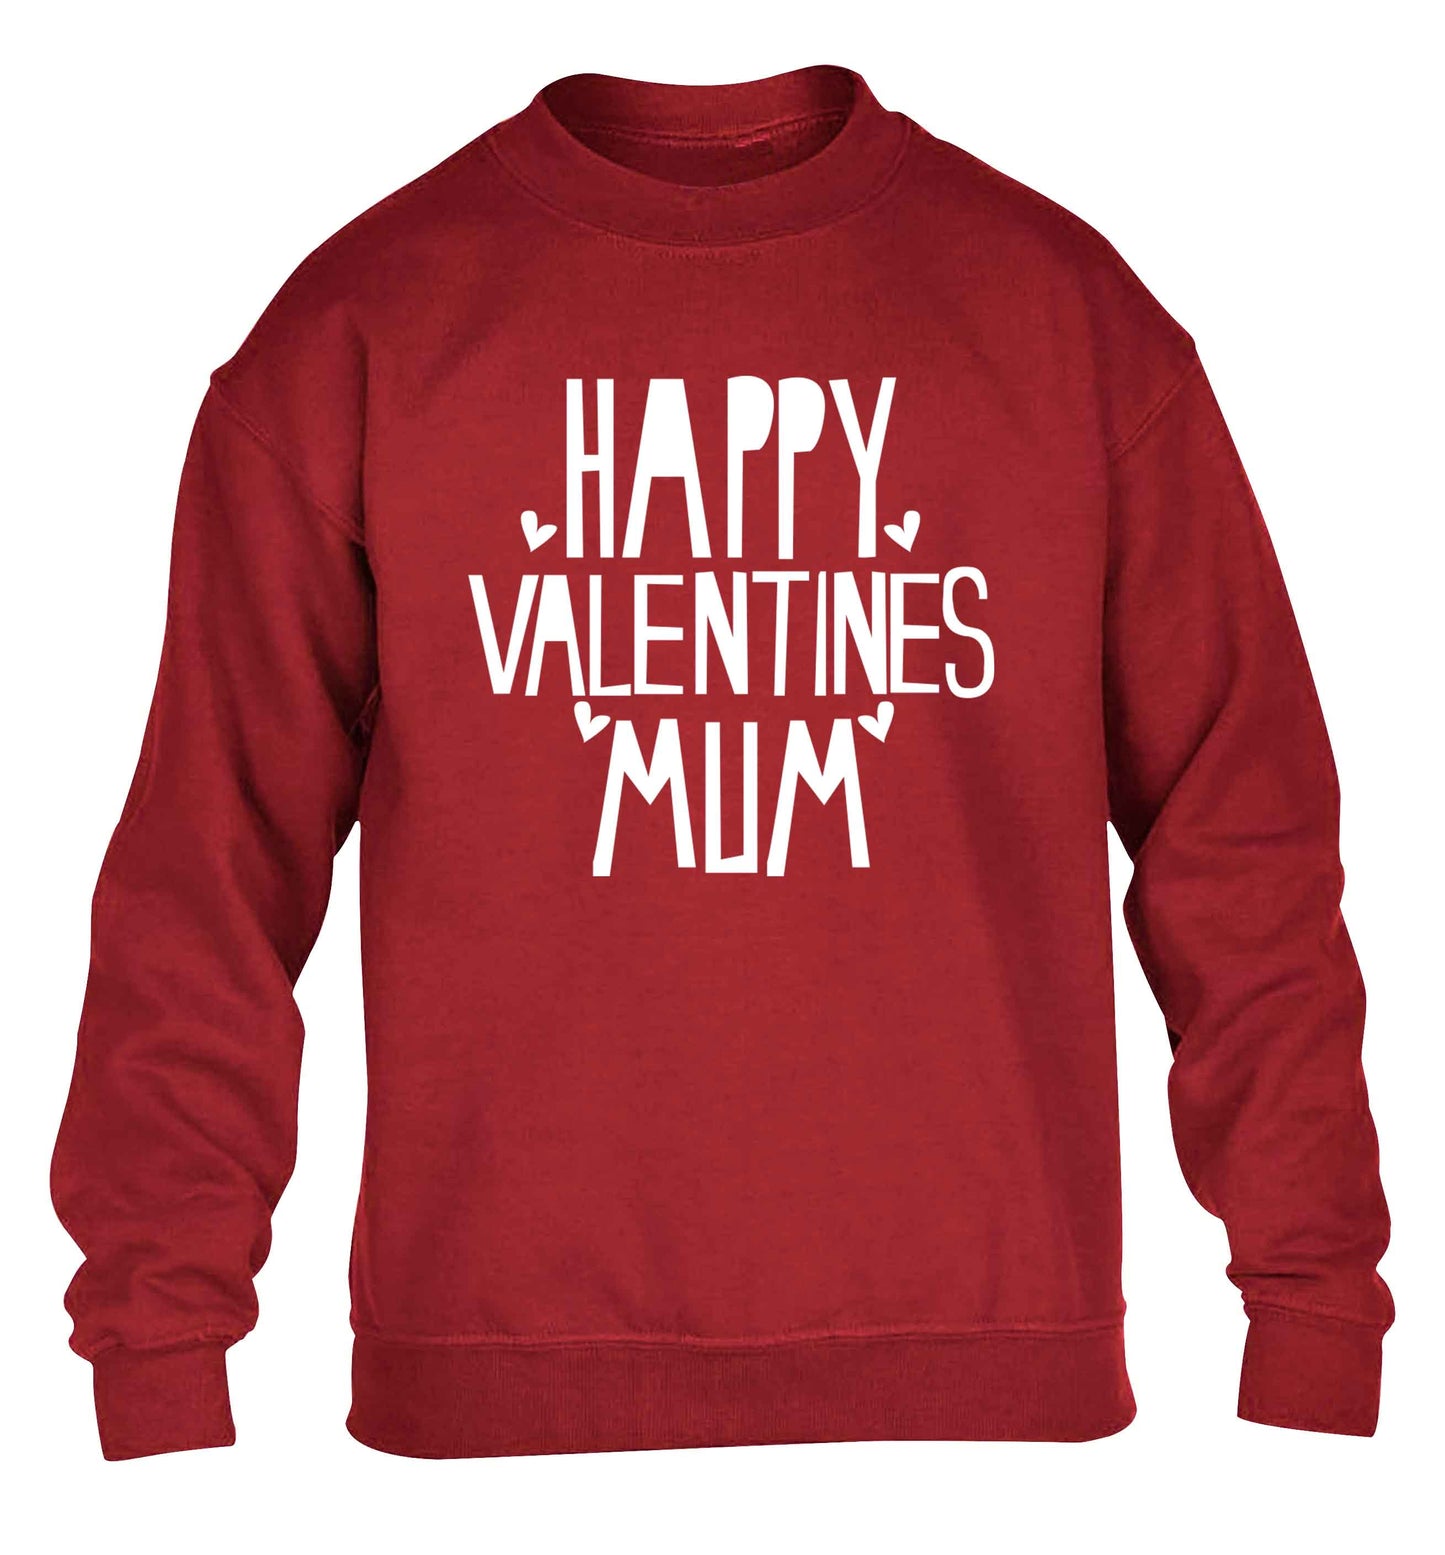 Happy valentines mum children's grey sweater 12-13 Years